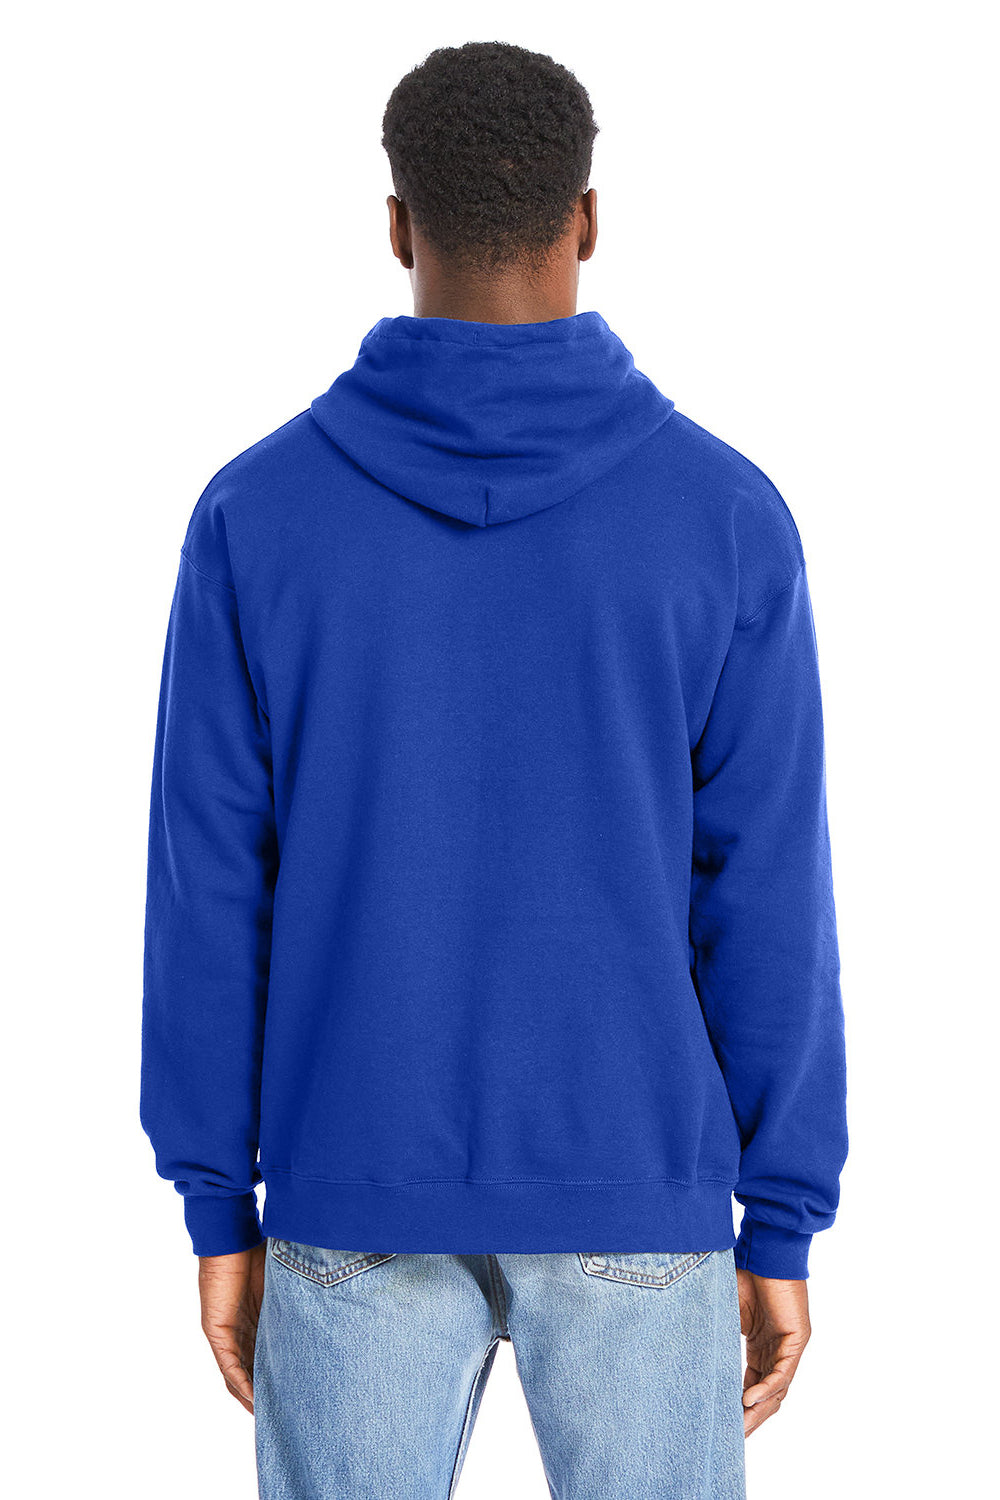 Hanes RS170 Mens Perfect Sweats Hooded Sweatshirt Hoodie Deep Royal Blue Back